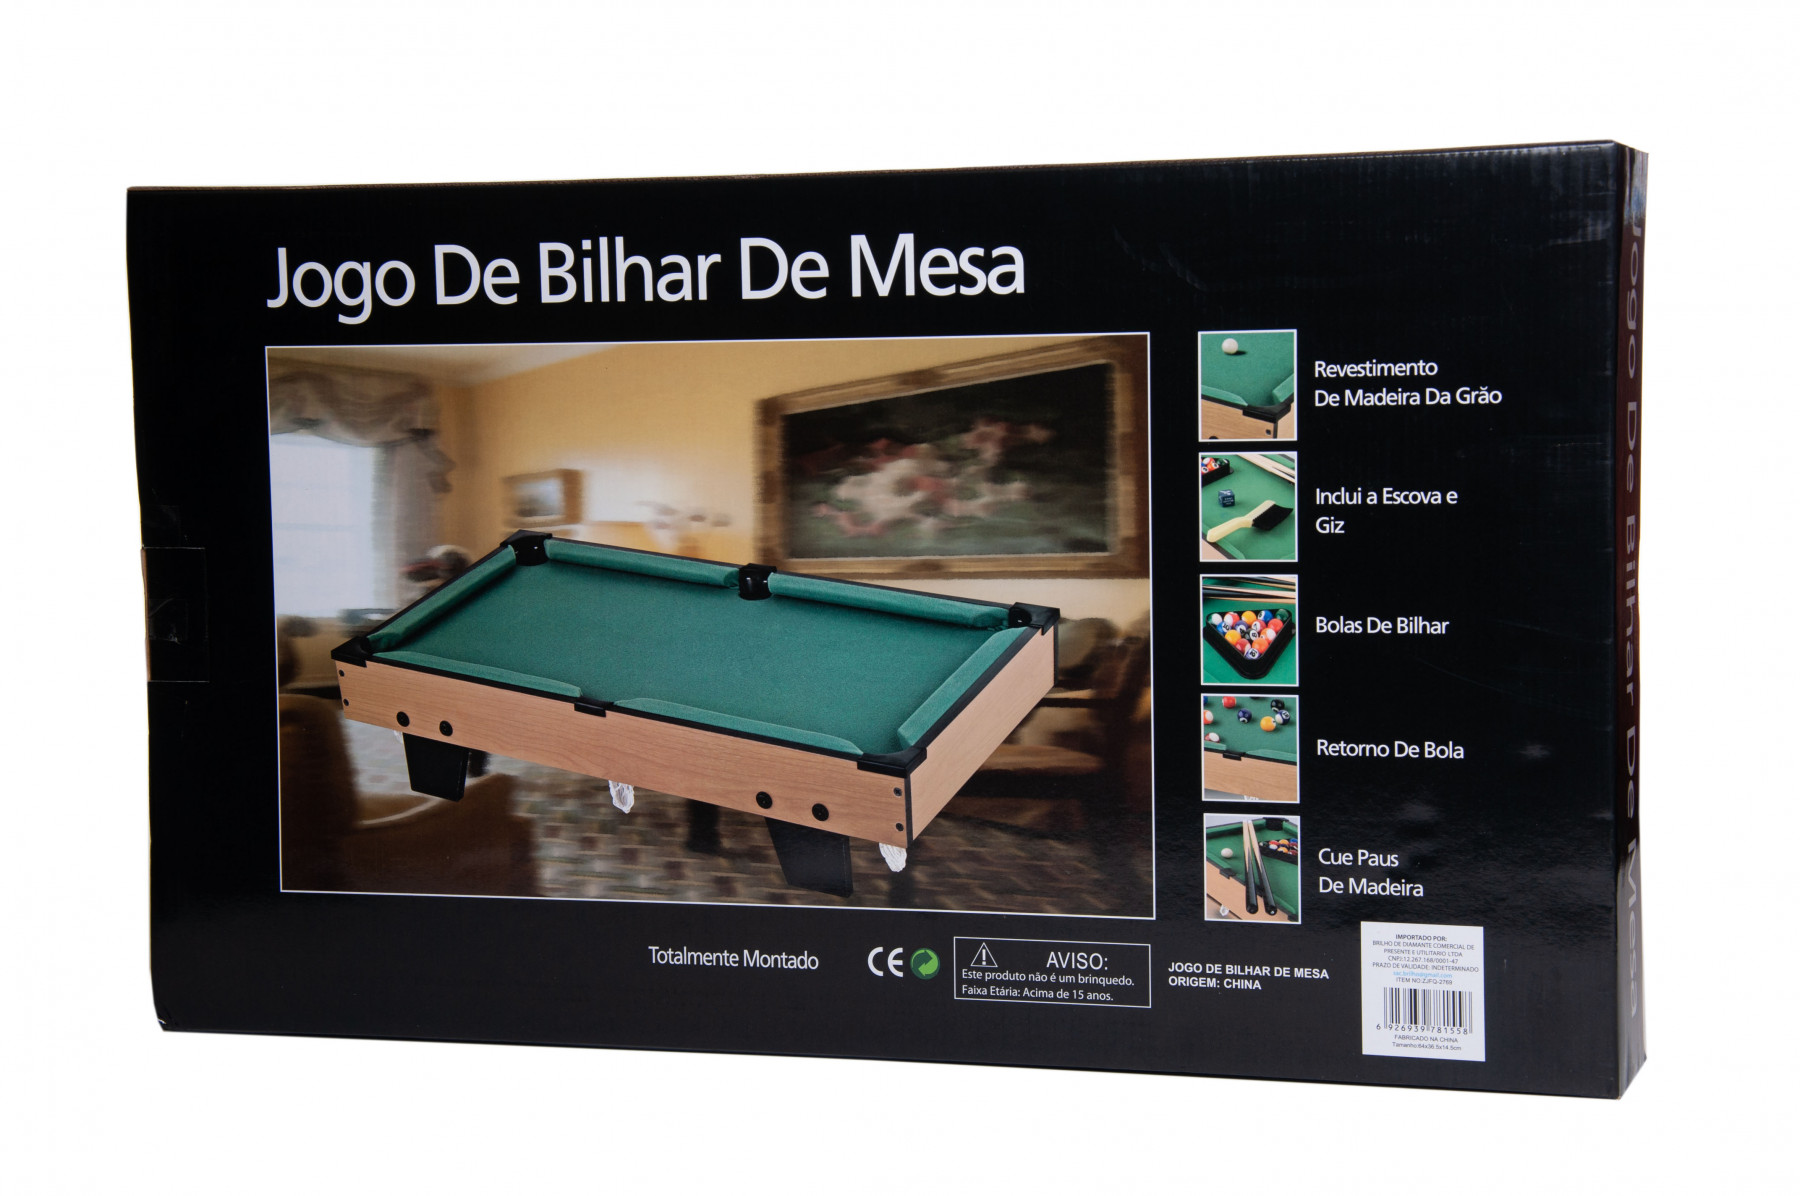 Jogos de Bilhar by Óscar & Jorge